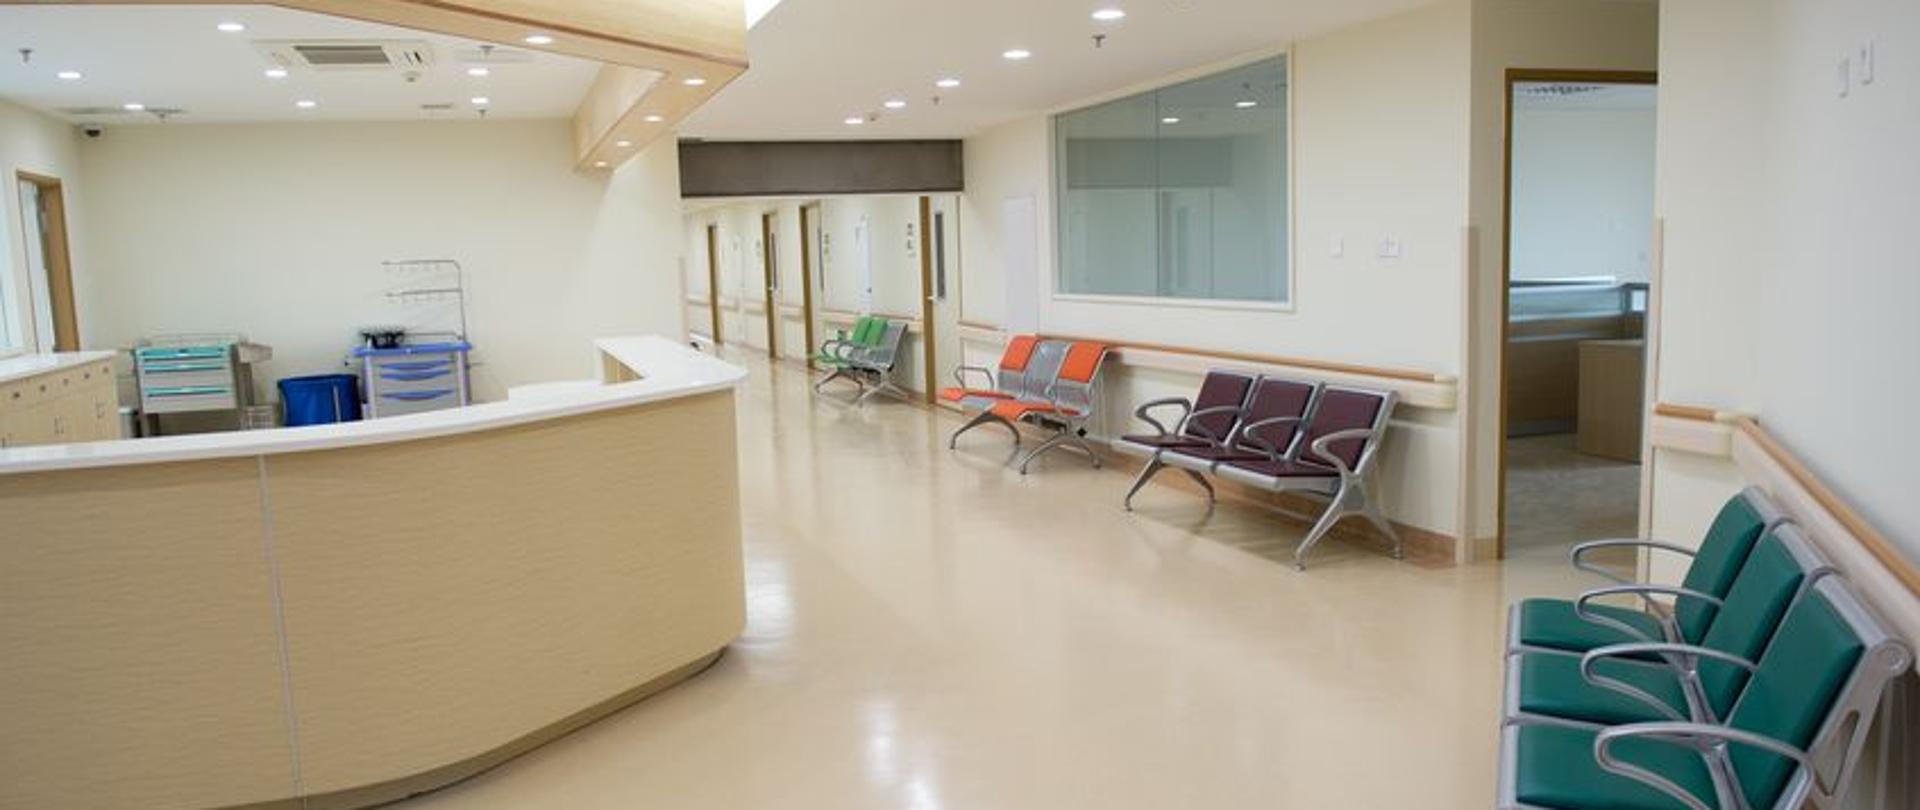 17828431 - empty nurses station in a hospital.